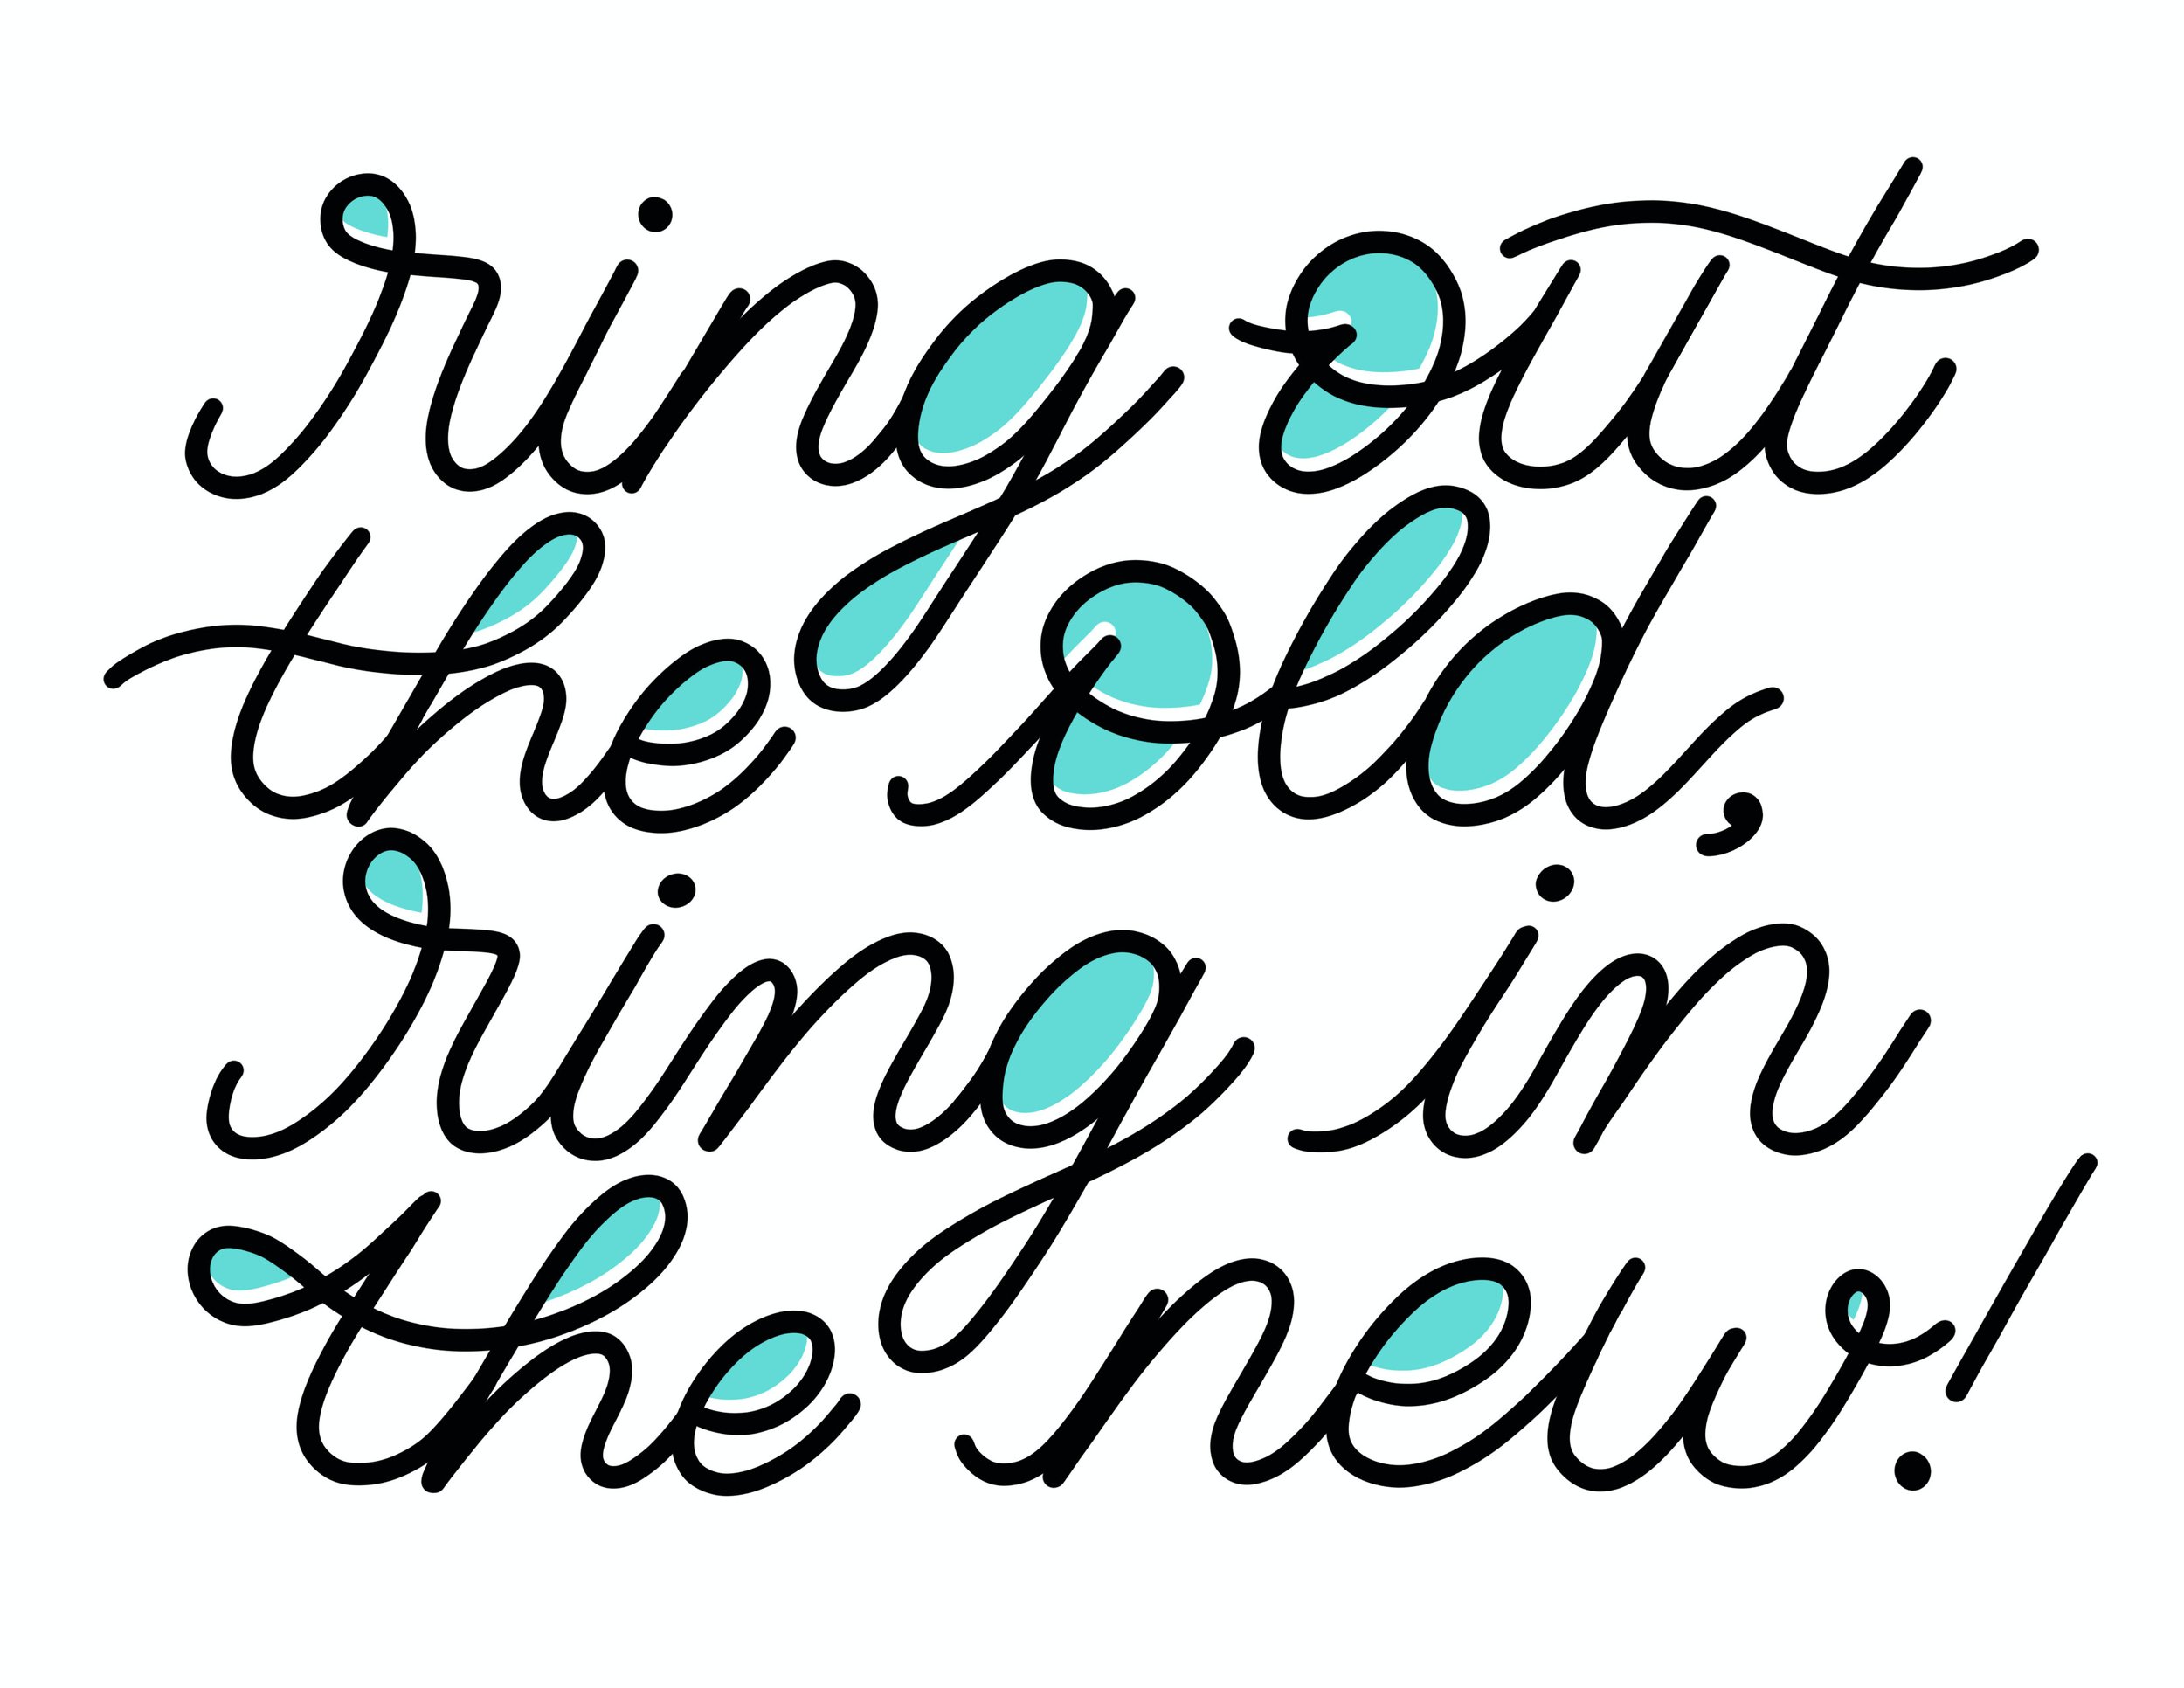 Ring Out, Wild Bells - Alfred, Lord Tennyson Poem - Literature - Typewriter  Print 1 Fleece Blanket by Studio Grafiikka - Pixels Merch